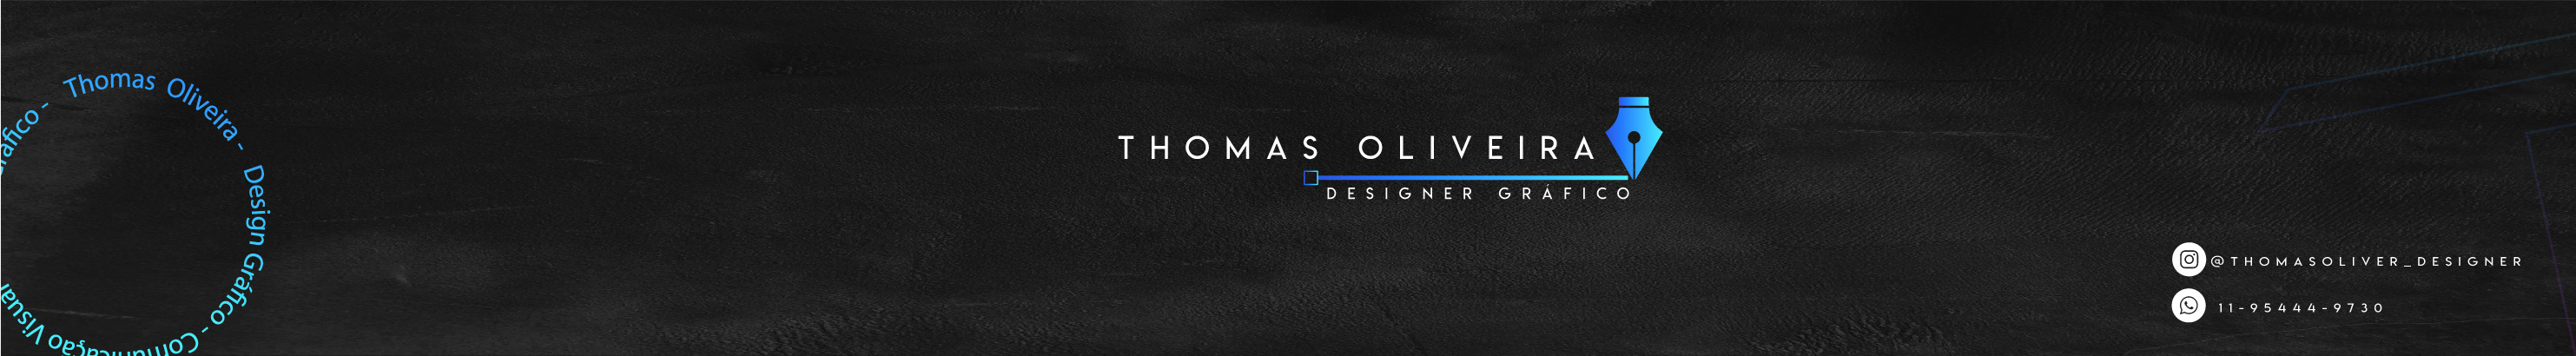 Bannière de profil de Thomas de Oliveira